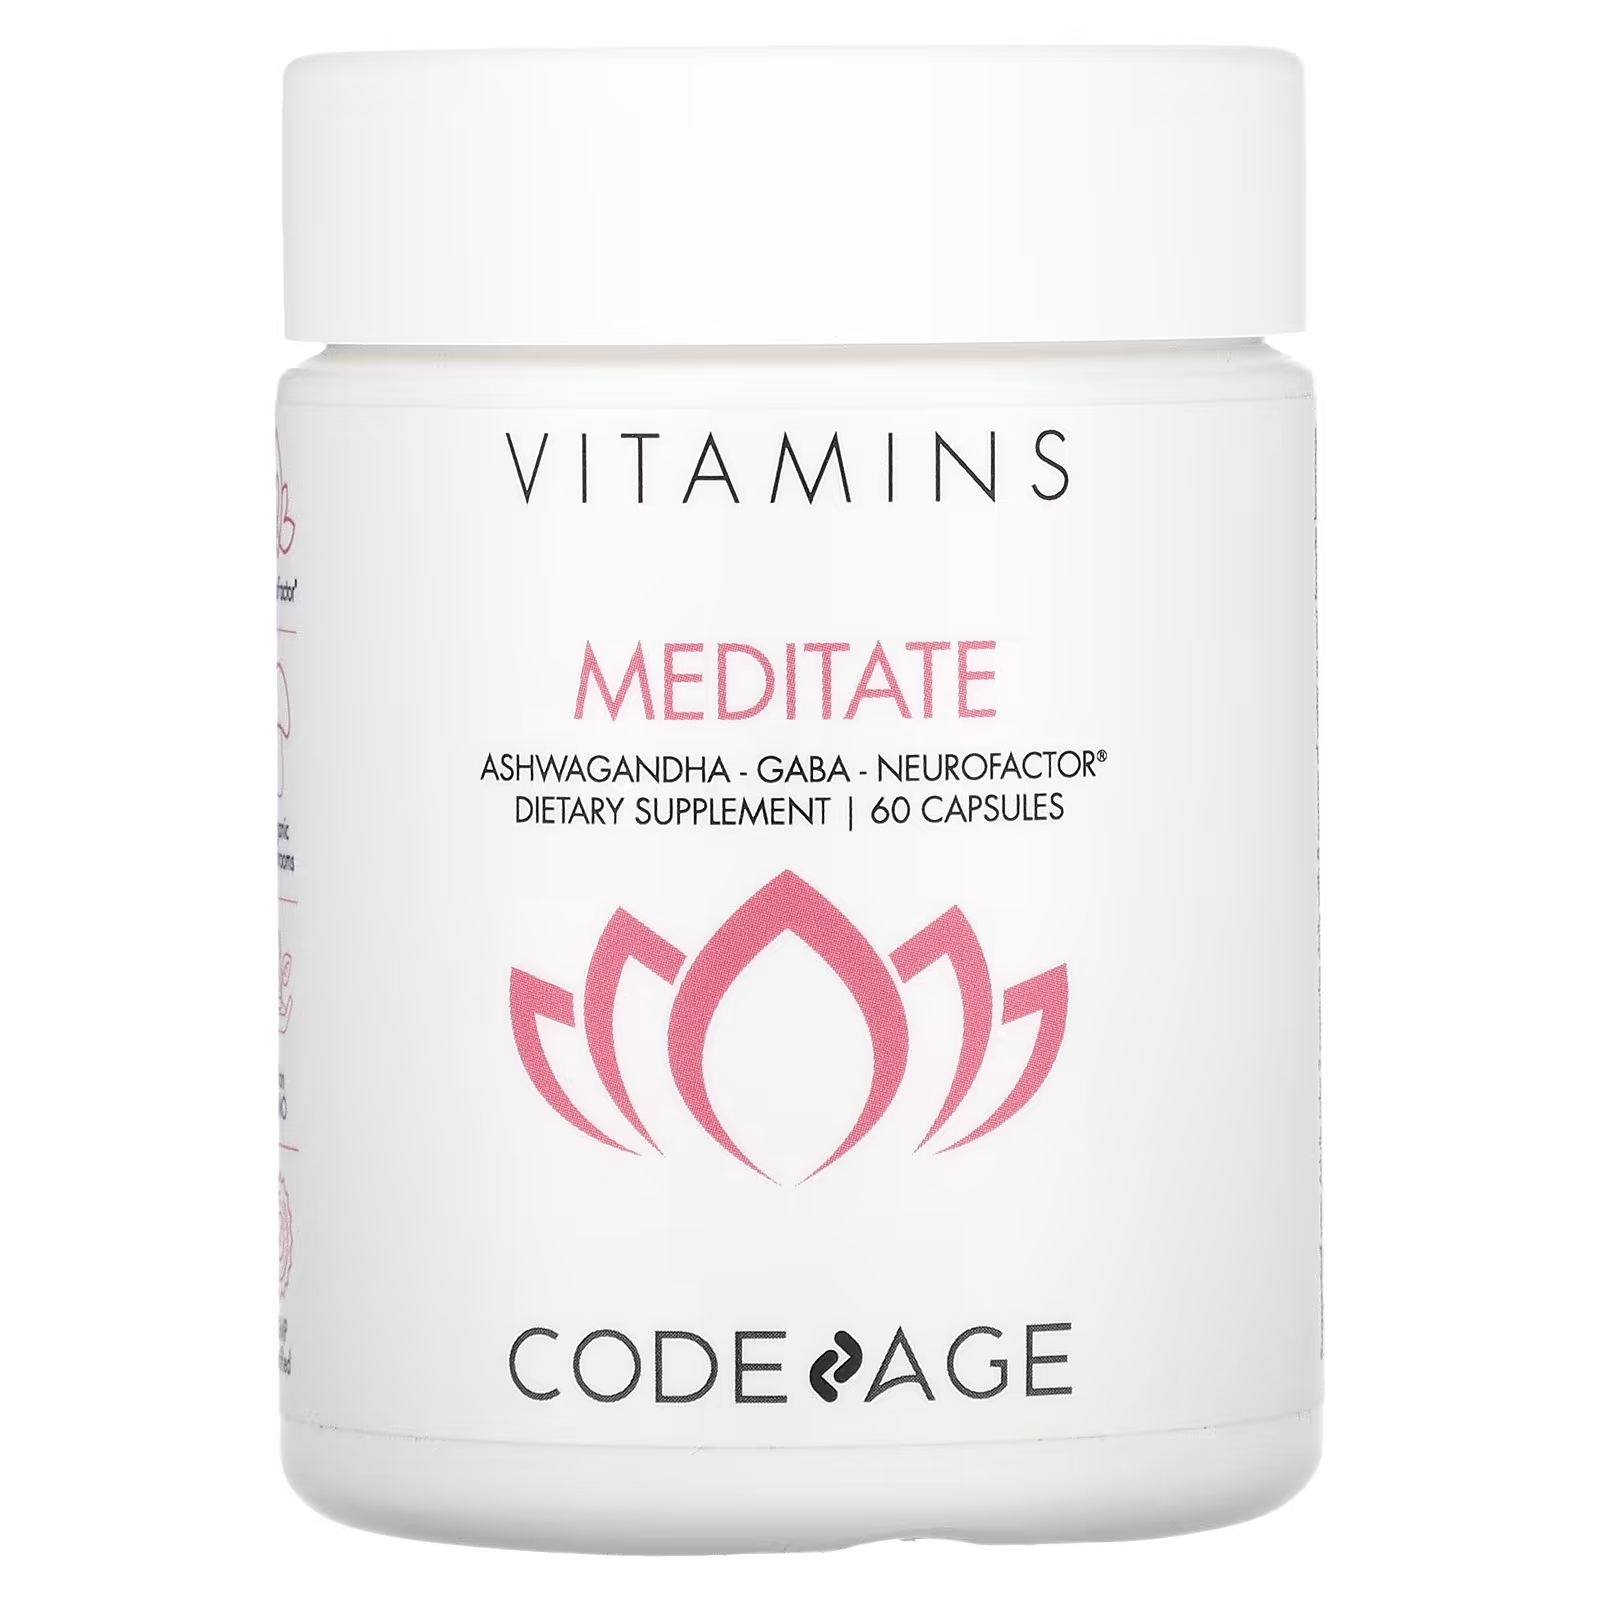 цена Codeage Vitamins Meditate ашваганда габа нейрофактор, 60 капсул